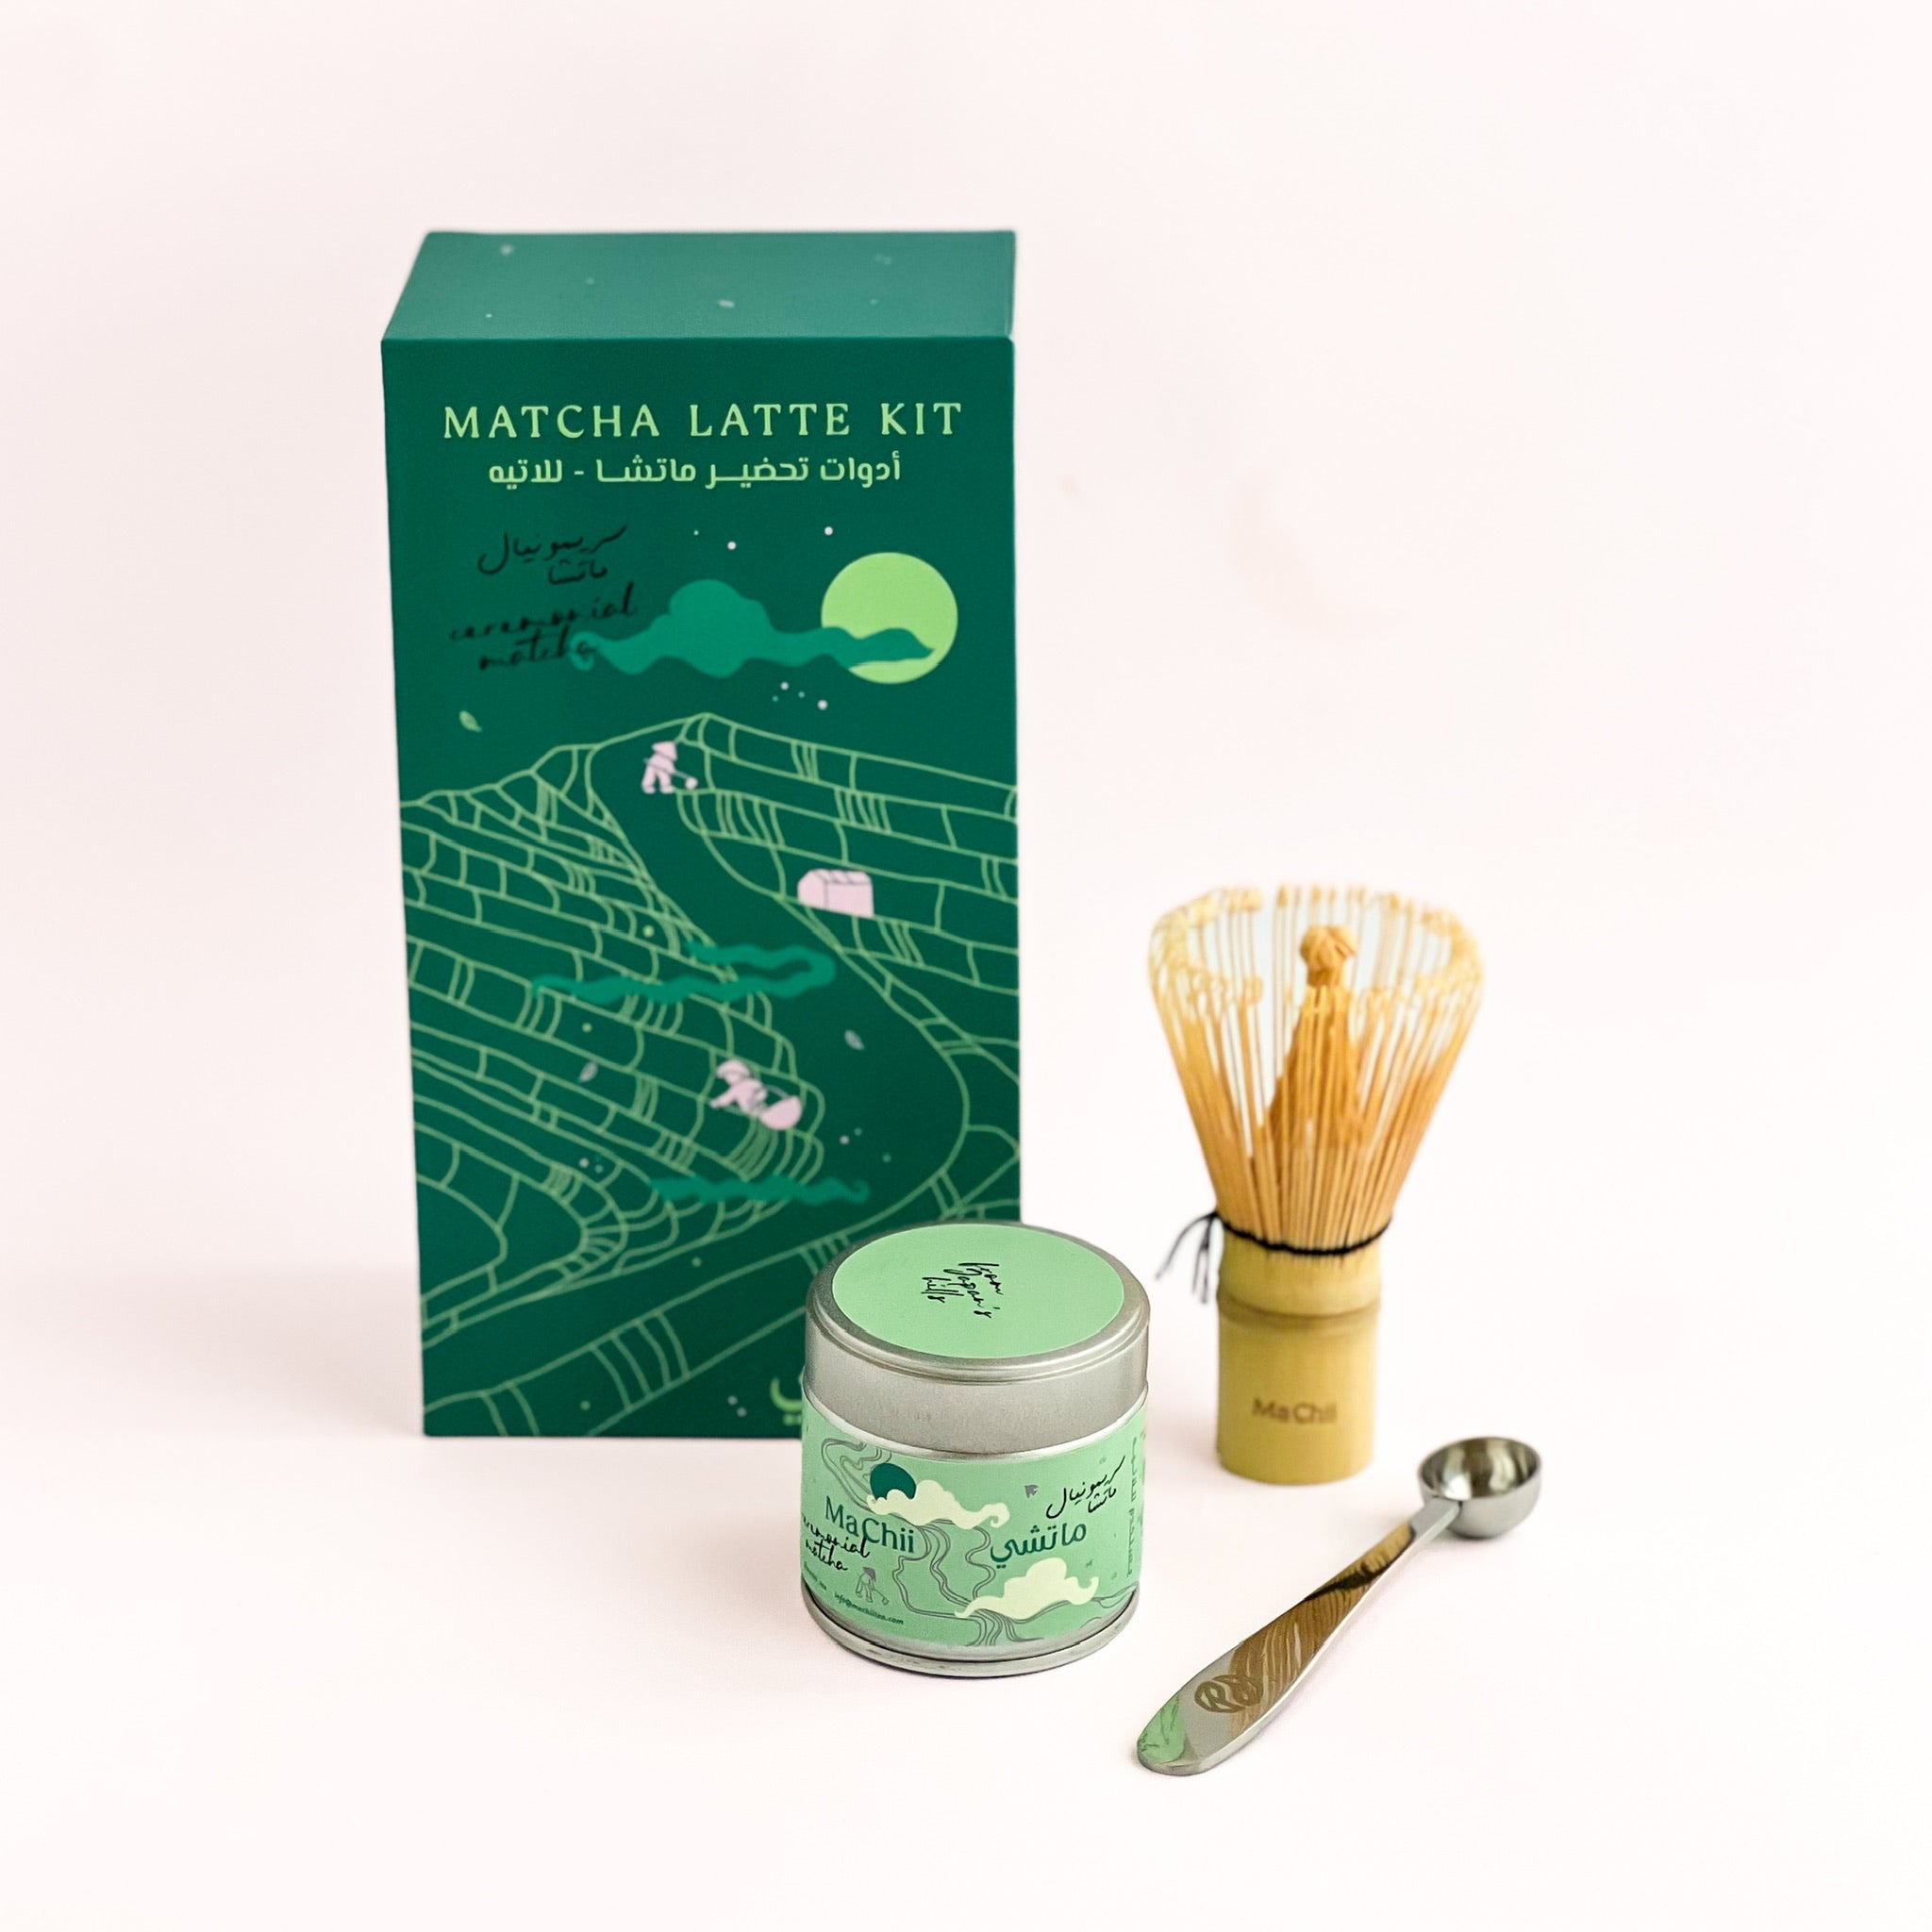 matcha kit box with ceremonial matcha for lattes tin, matcha spoon and bamboo matcha whisk to the side. MaChii Tea logo